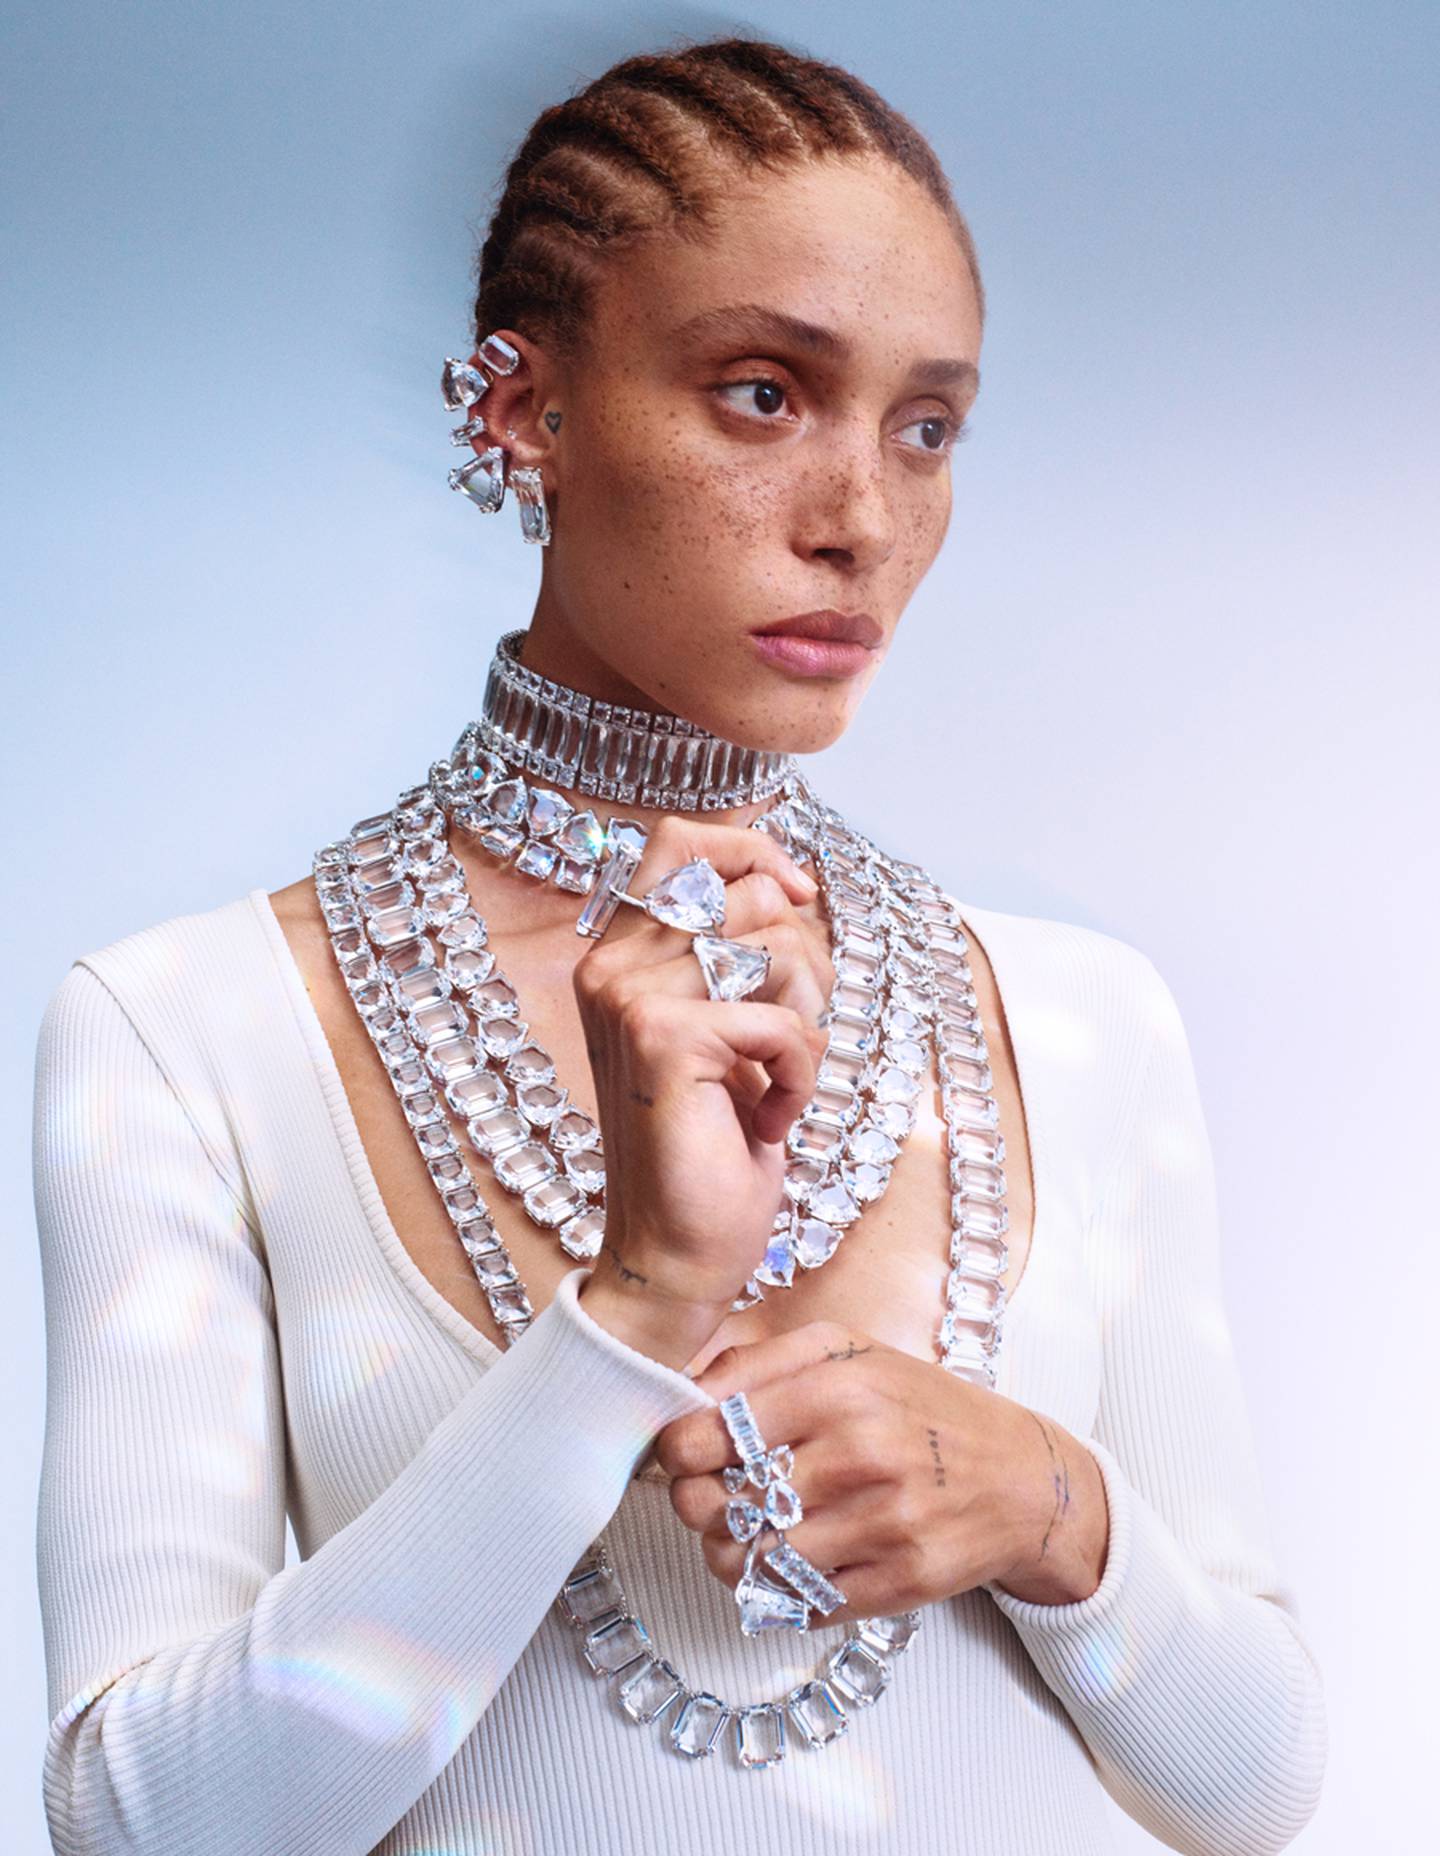 Adwoah Aboah models crystal jewellery designed by Giovanna Battaglia Engelbert for Swarovski.